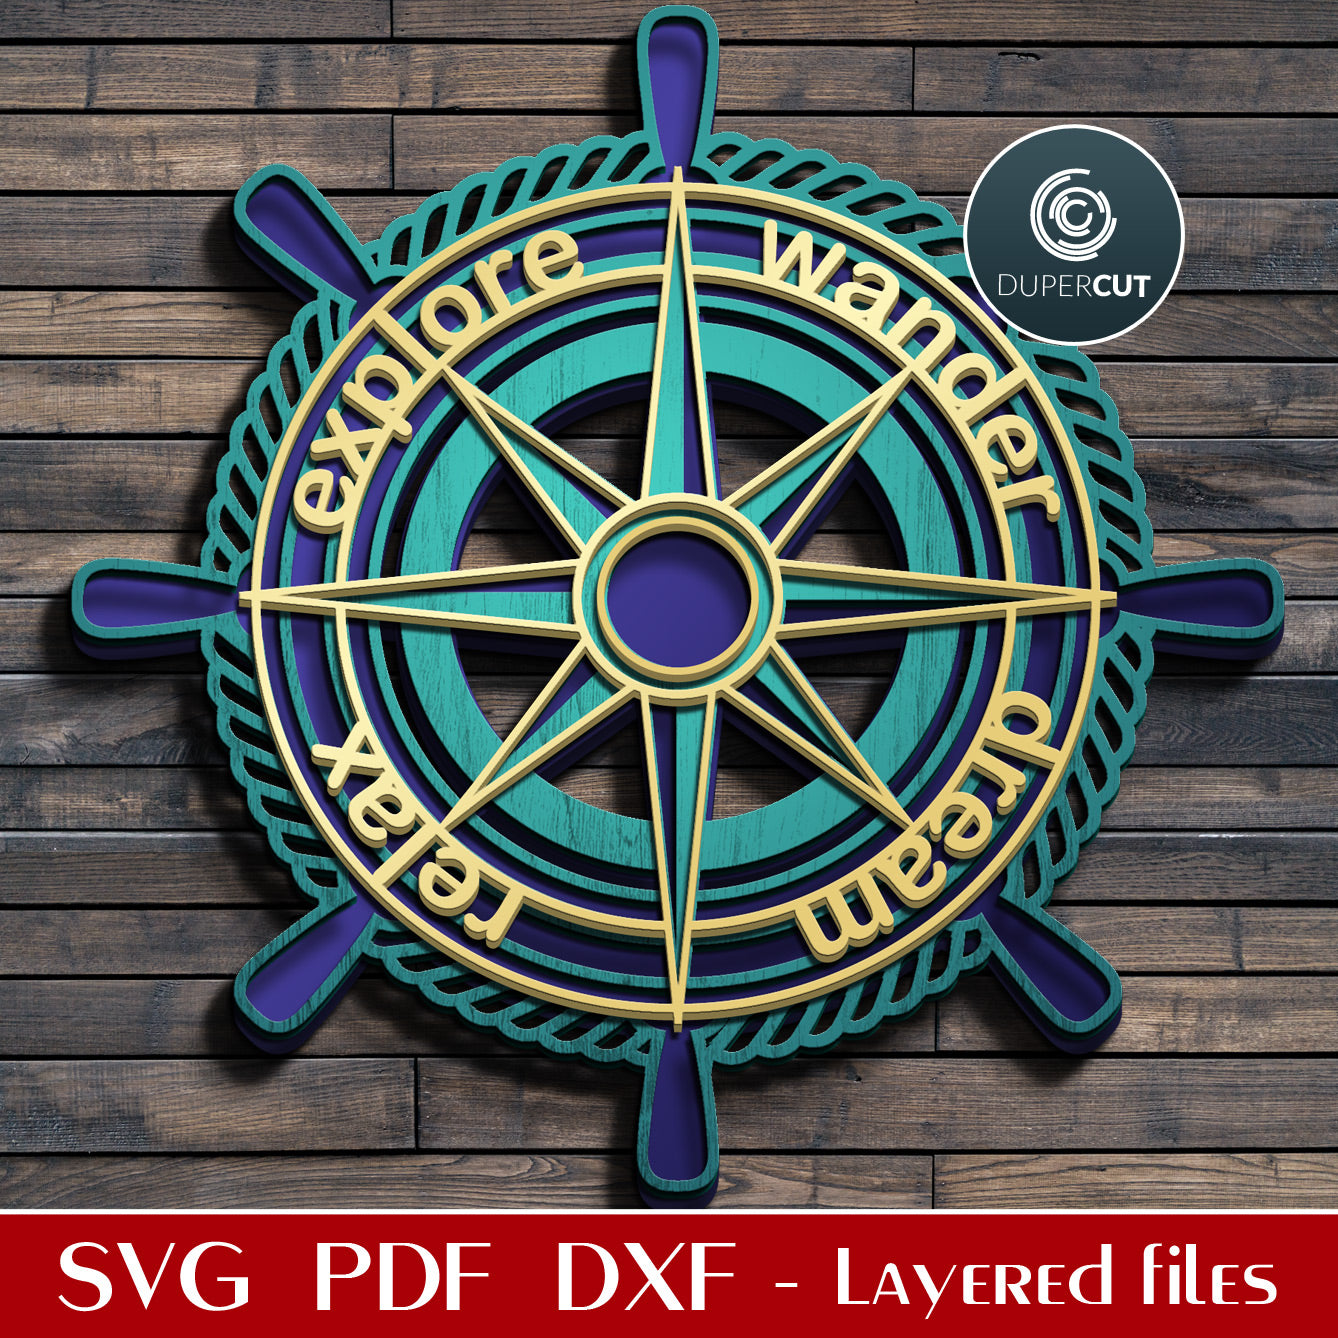 Nautical ship compass sign - diy home decor - explore wander dream relax  - SVG PDF DXF layered laser cutting files for Glowforge, Cricut, Silhouette, CNC plasma machines by DuperCut